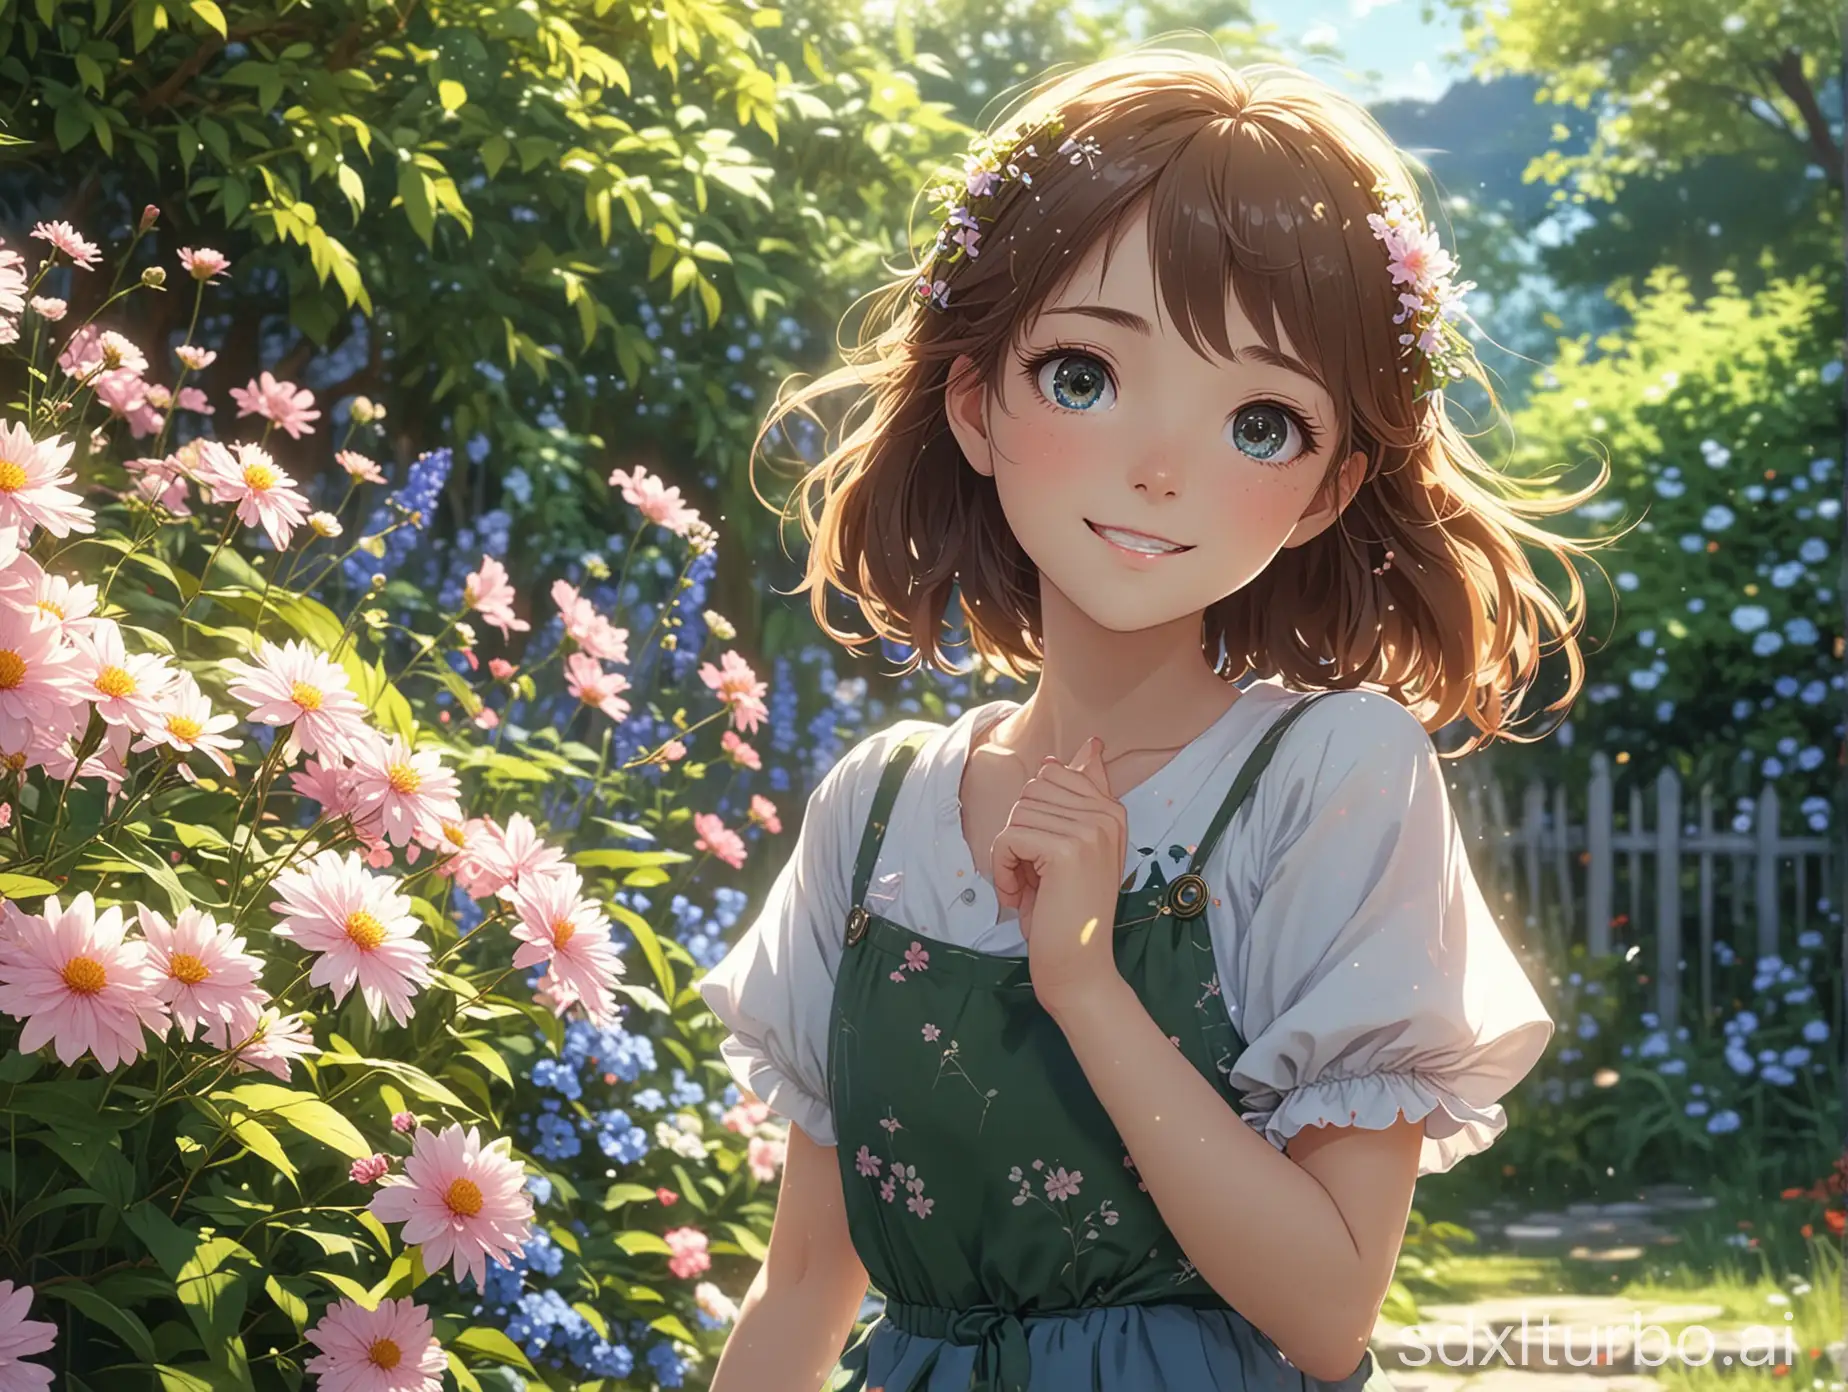 Confident-Anime-Girl-Amidst-Luminous-Garden-Flowers